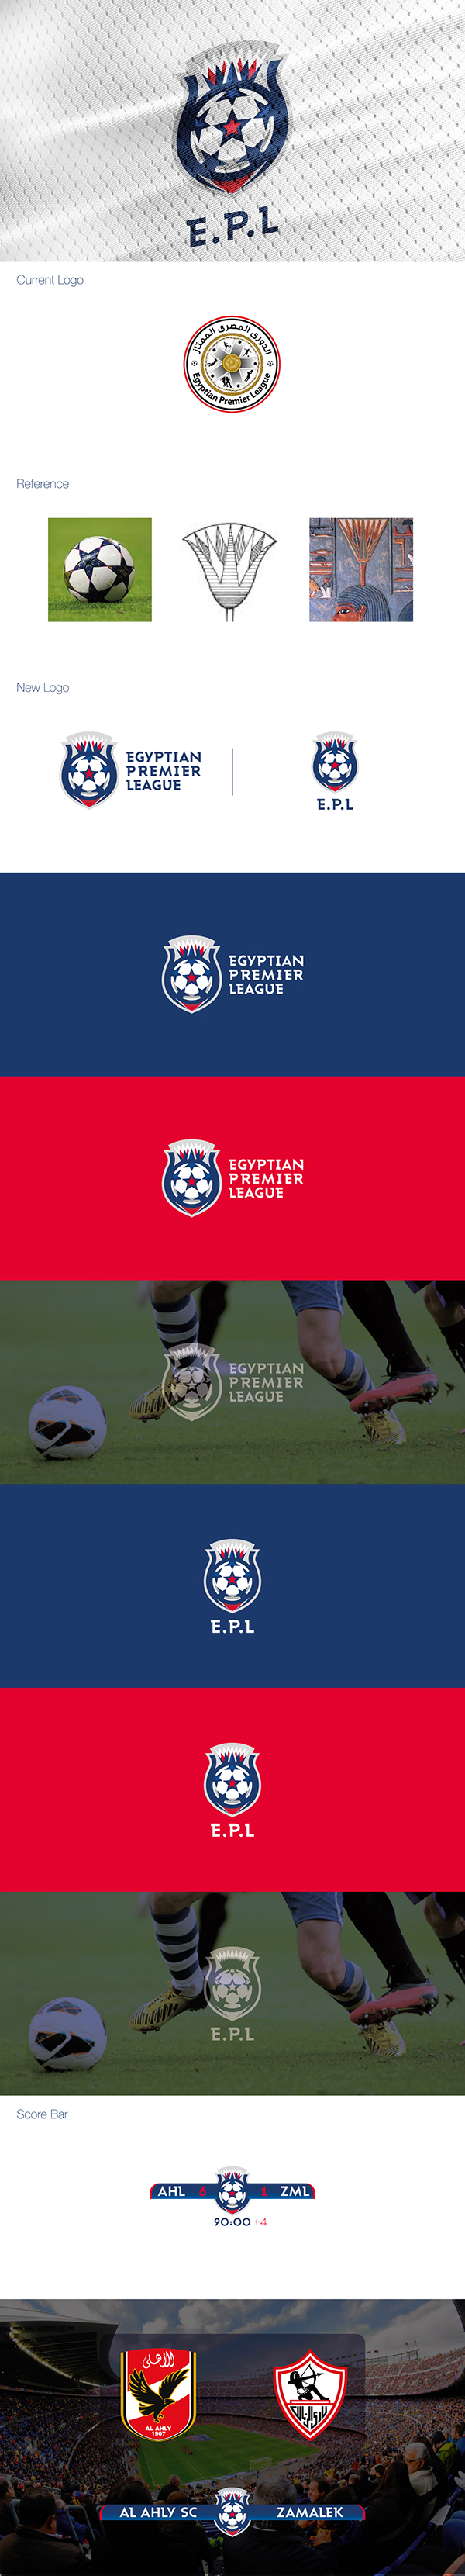 Egyptian Premier League on Behance